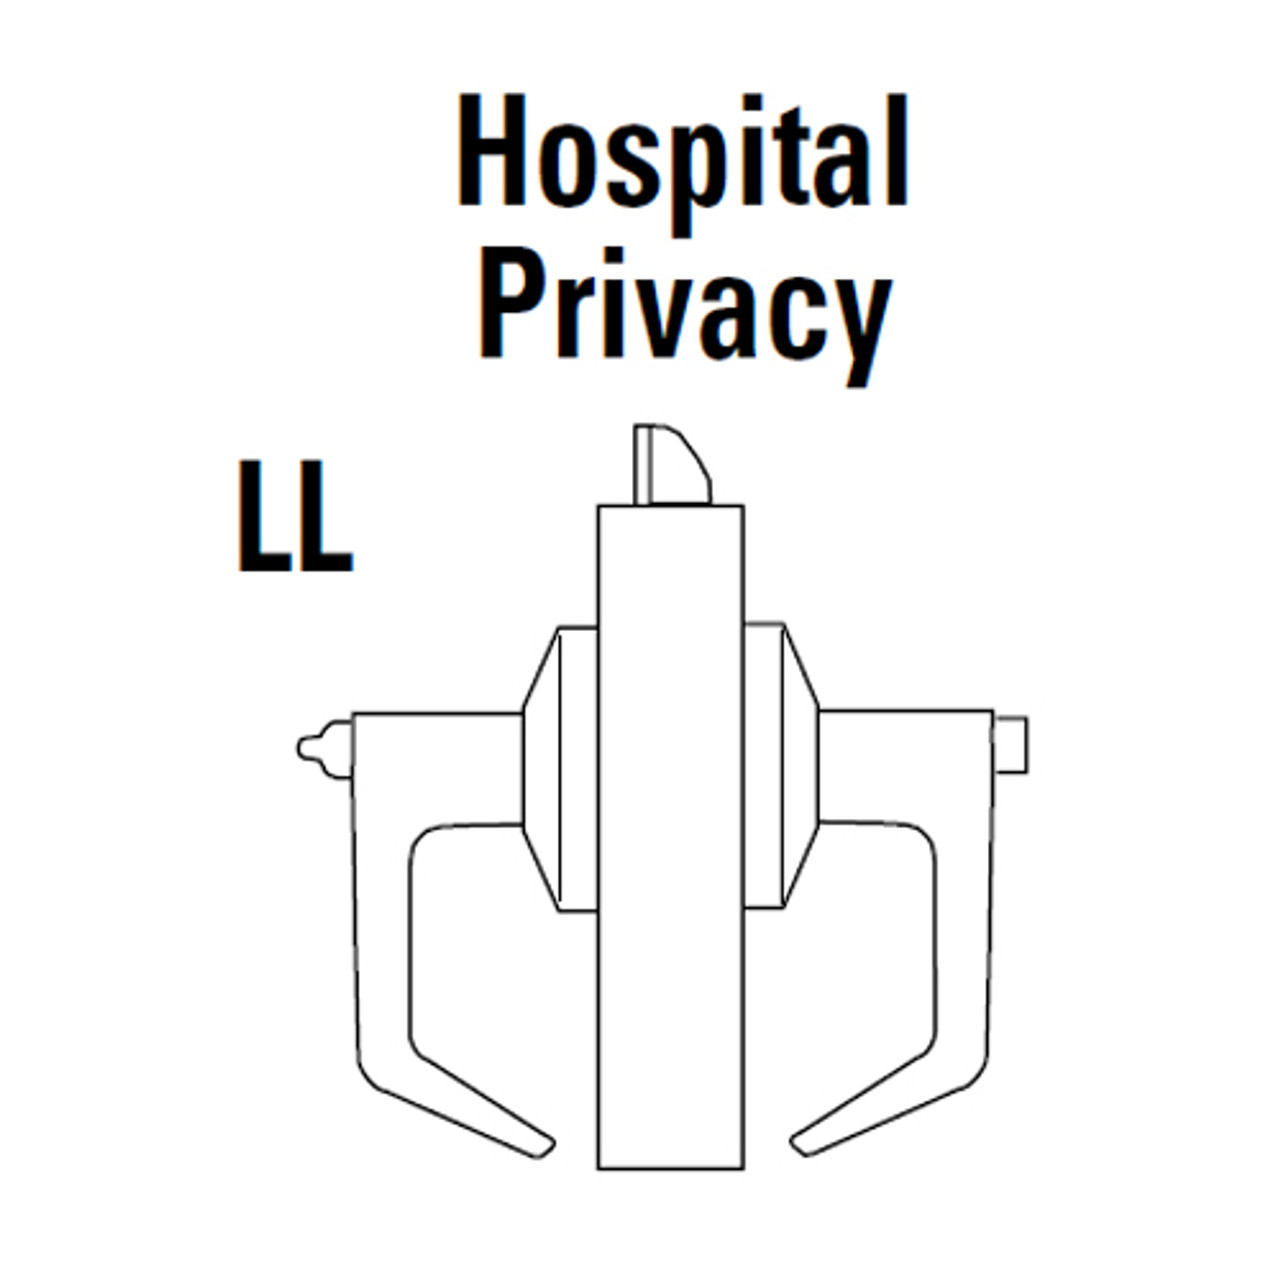 9K30LL14CSTK626 Best 9K Series Hospital Privacy Heavy Duty Cylindrical Lever Locks in Satin Chrome